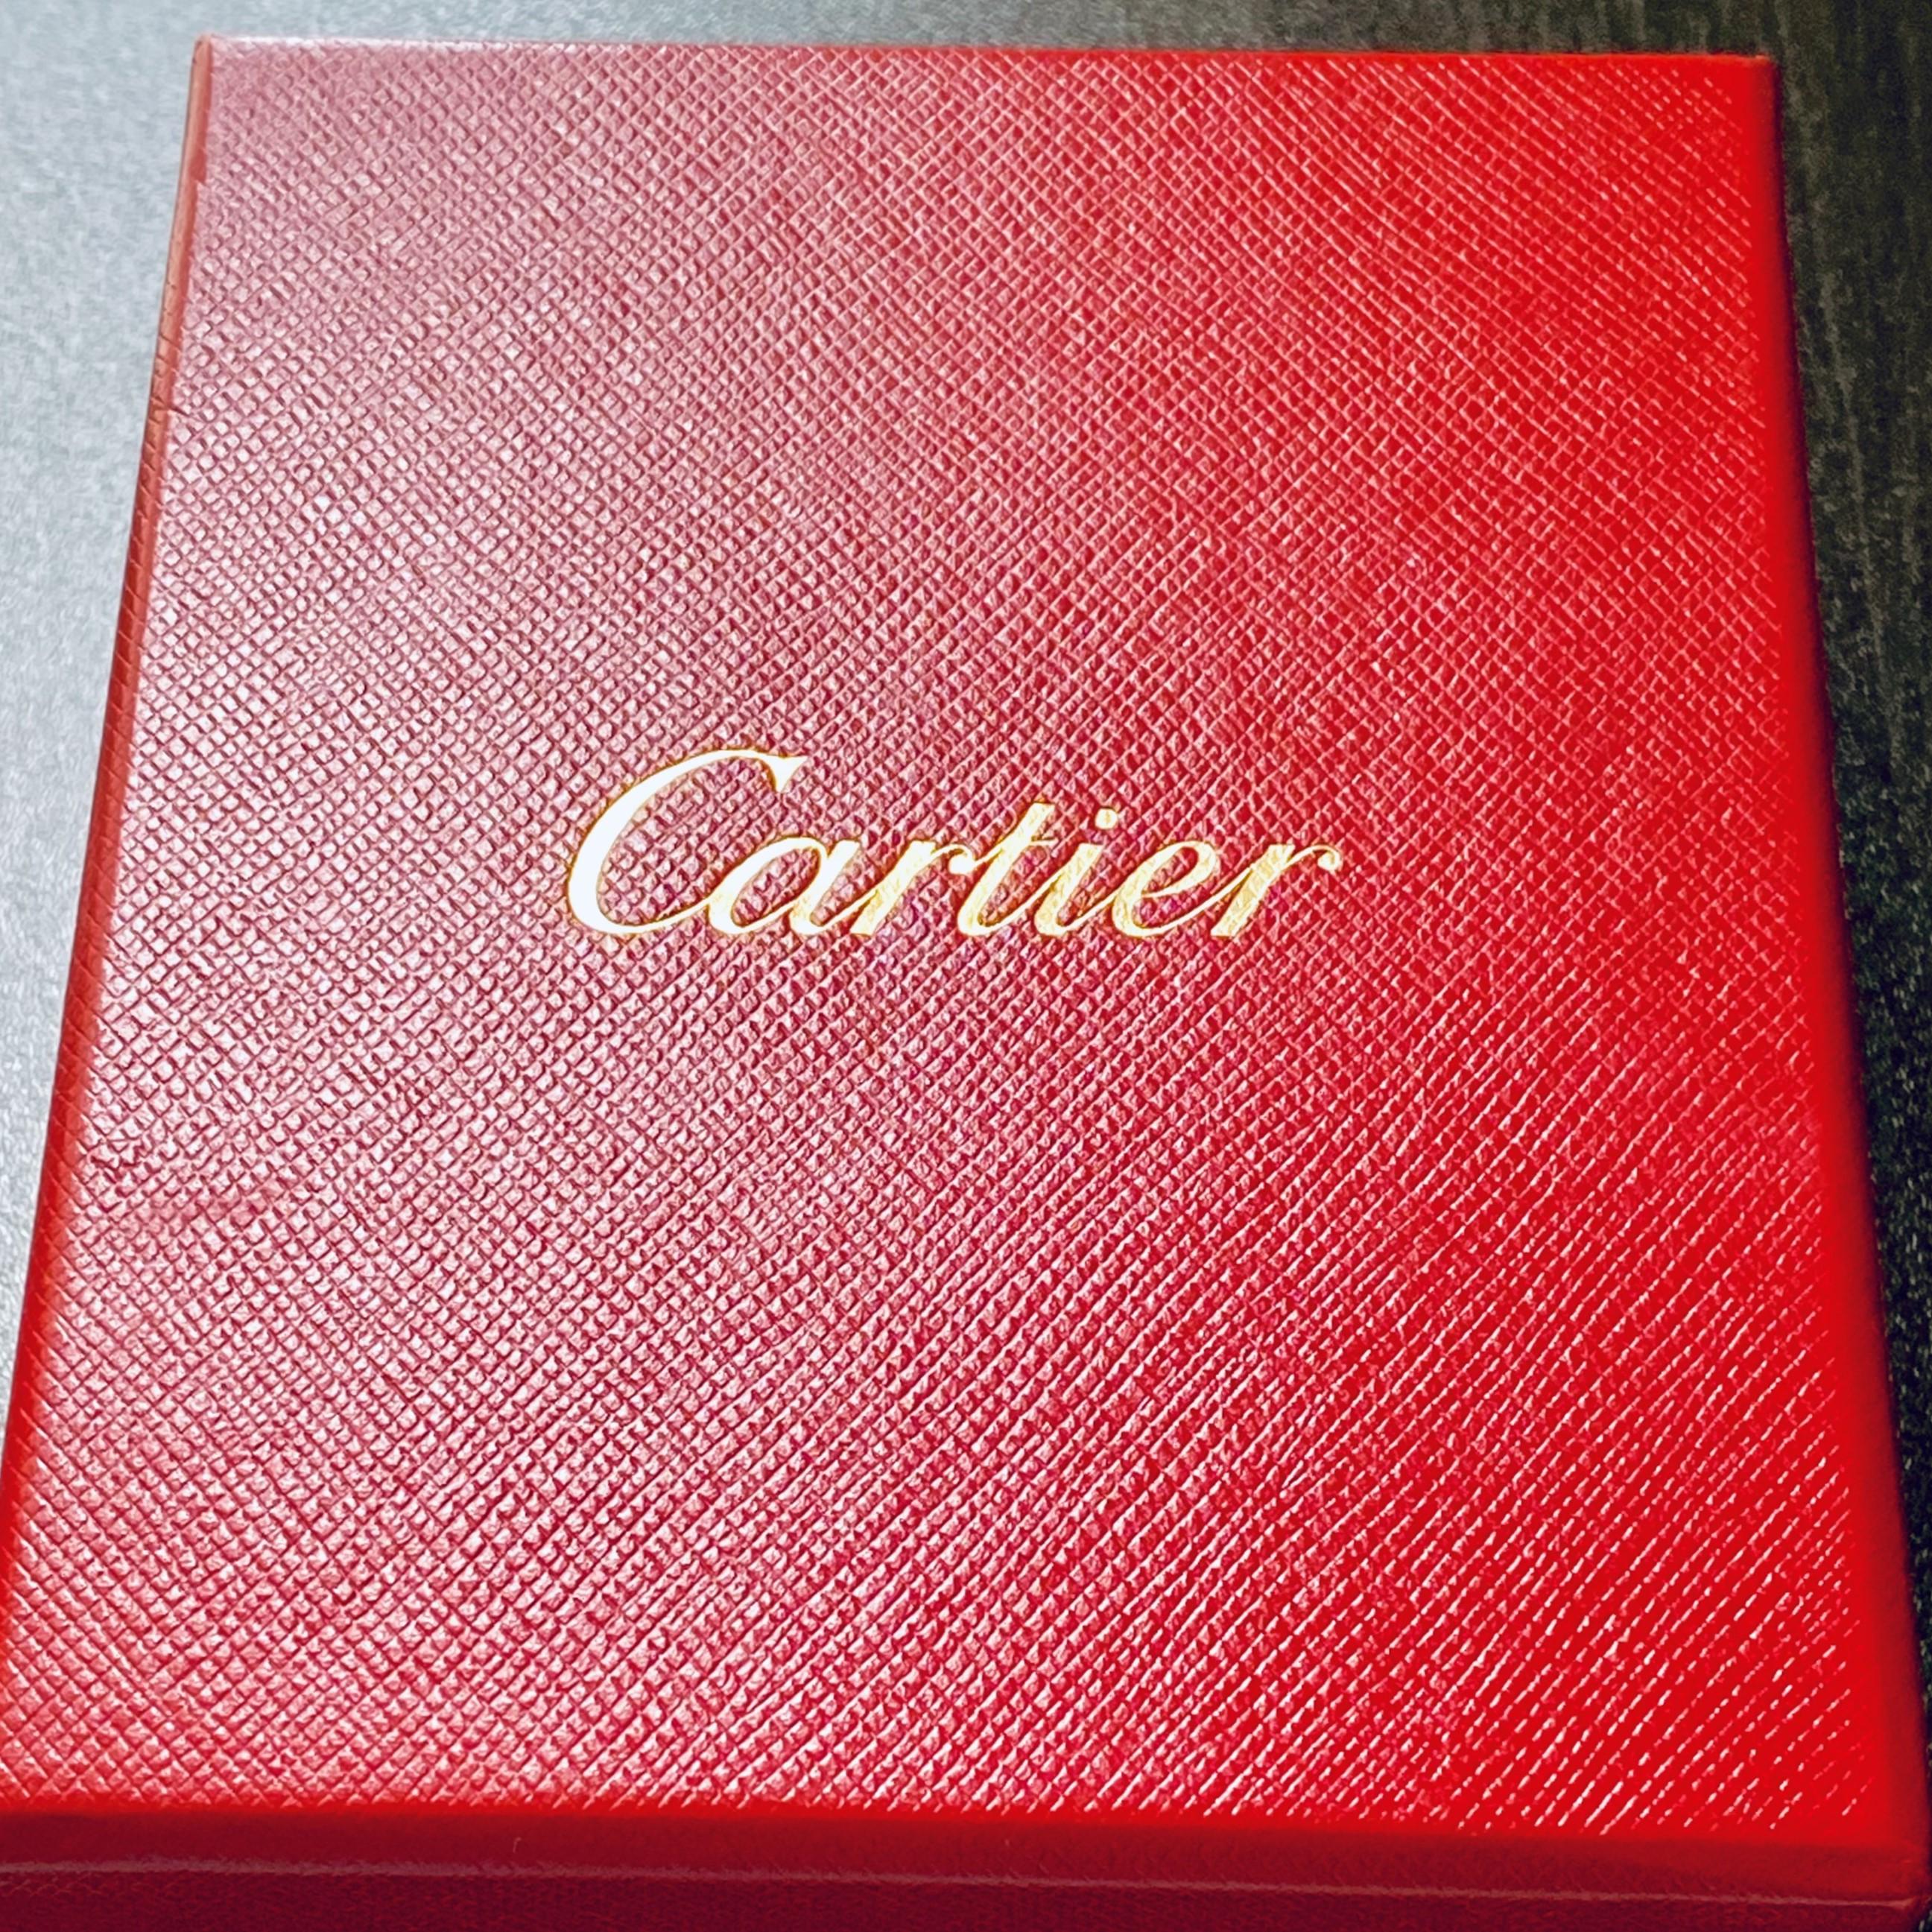 Contemporain Cartier Broche rare représentant un canard en or jaune 18 carats émaillé, 1992  en vente